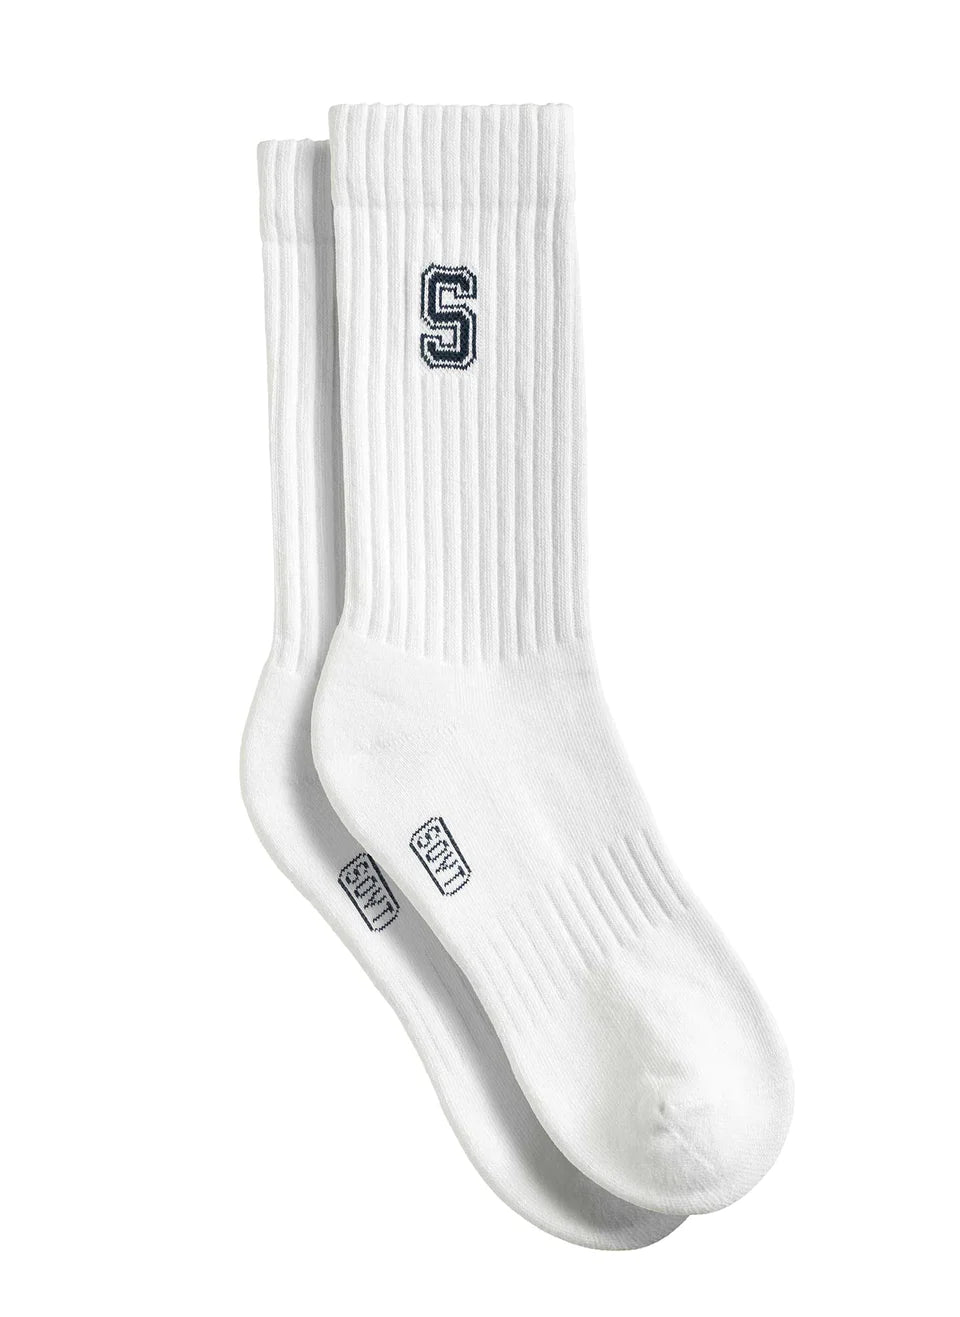 College Socks- white-blue